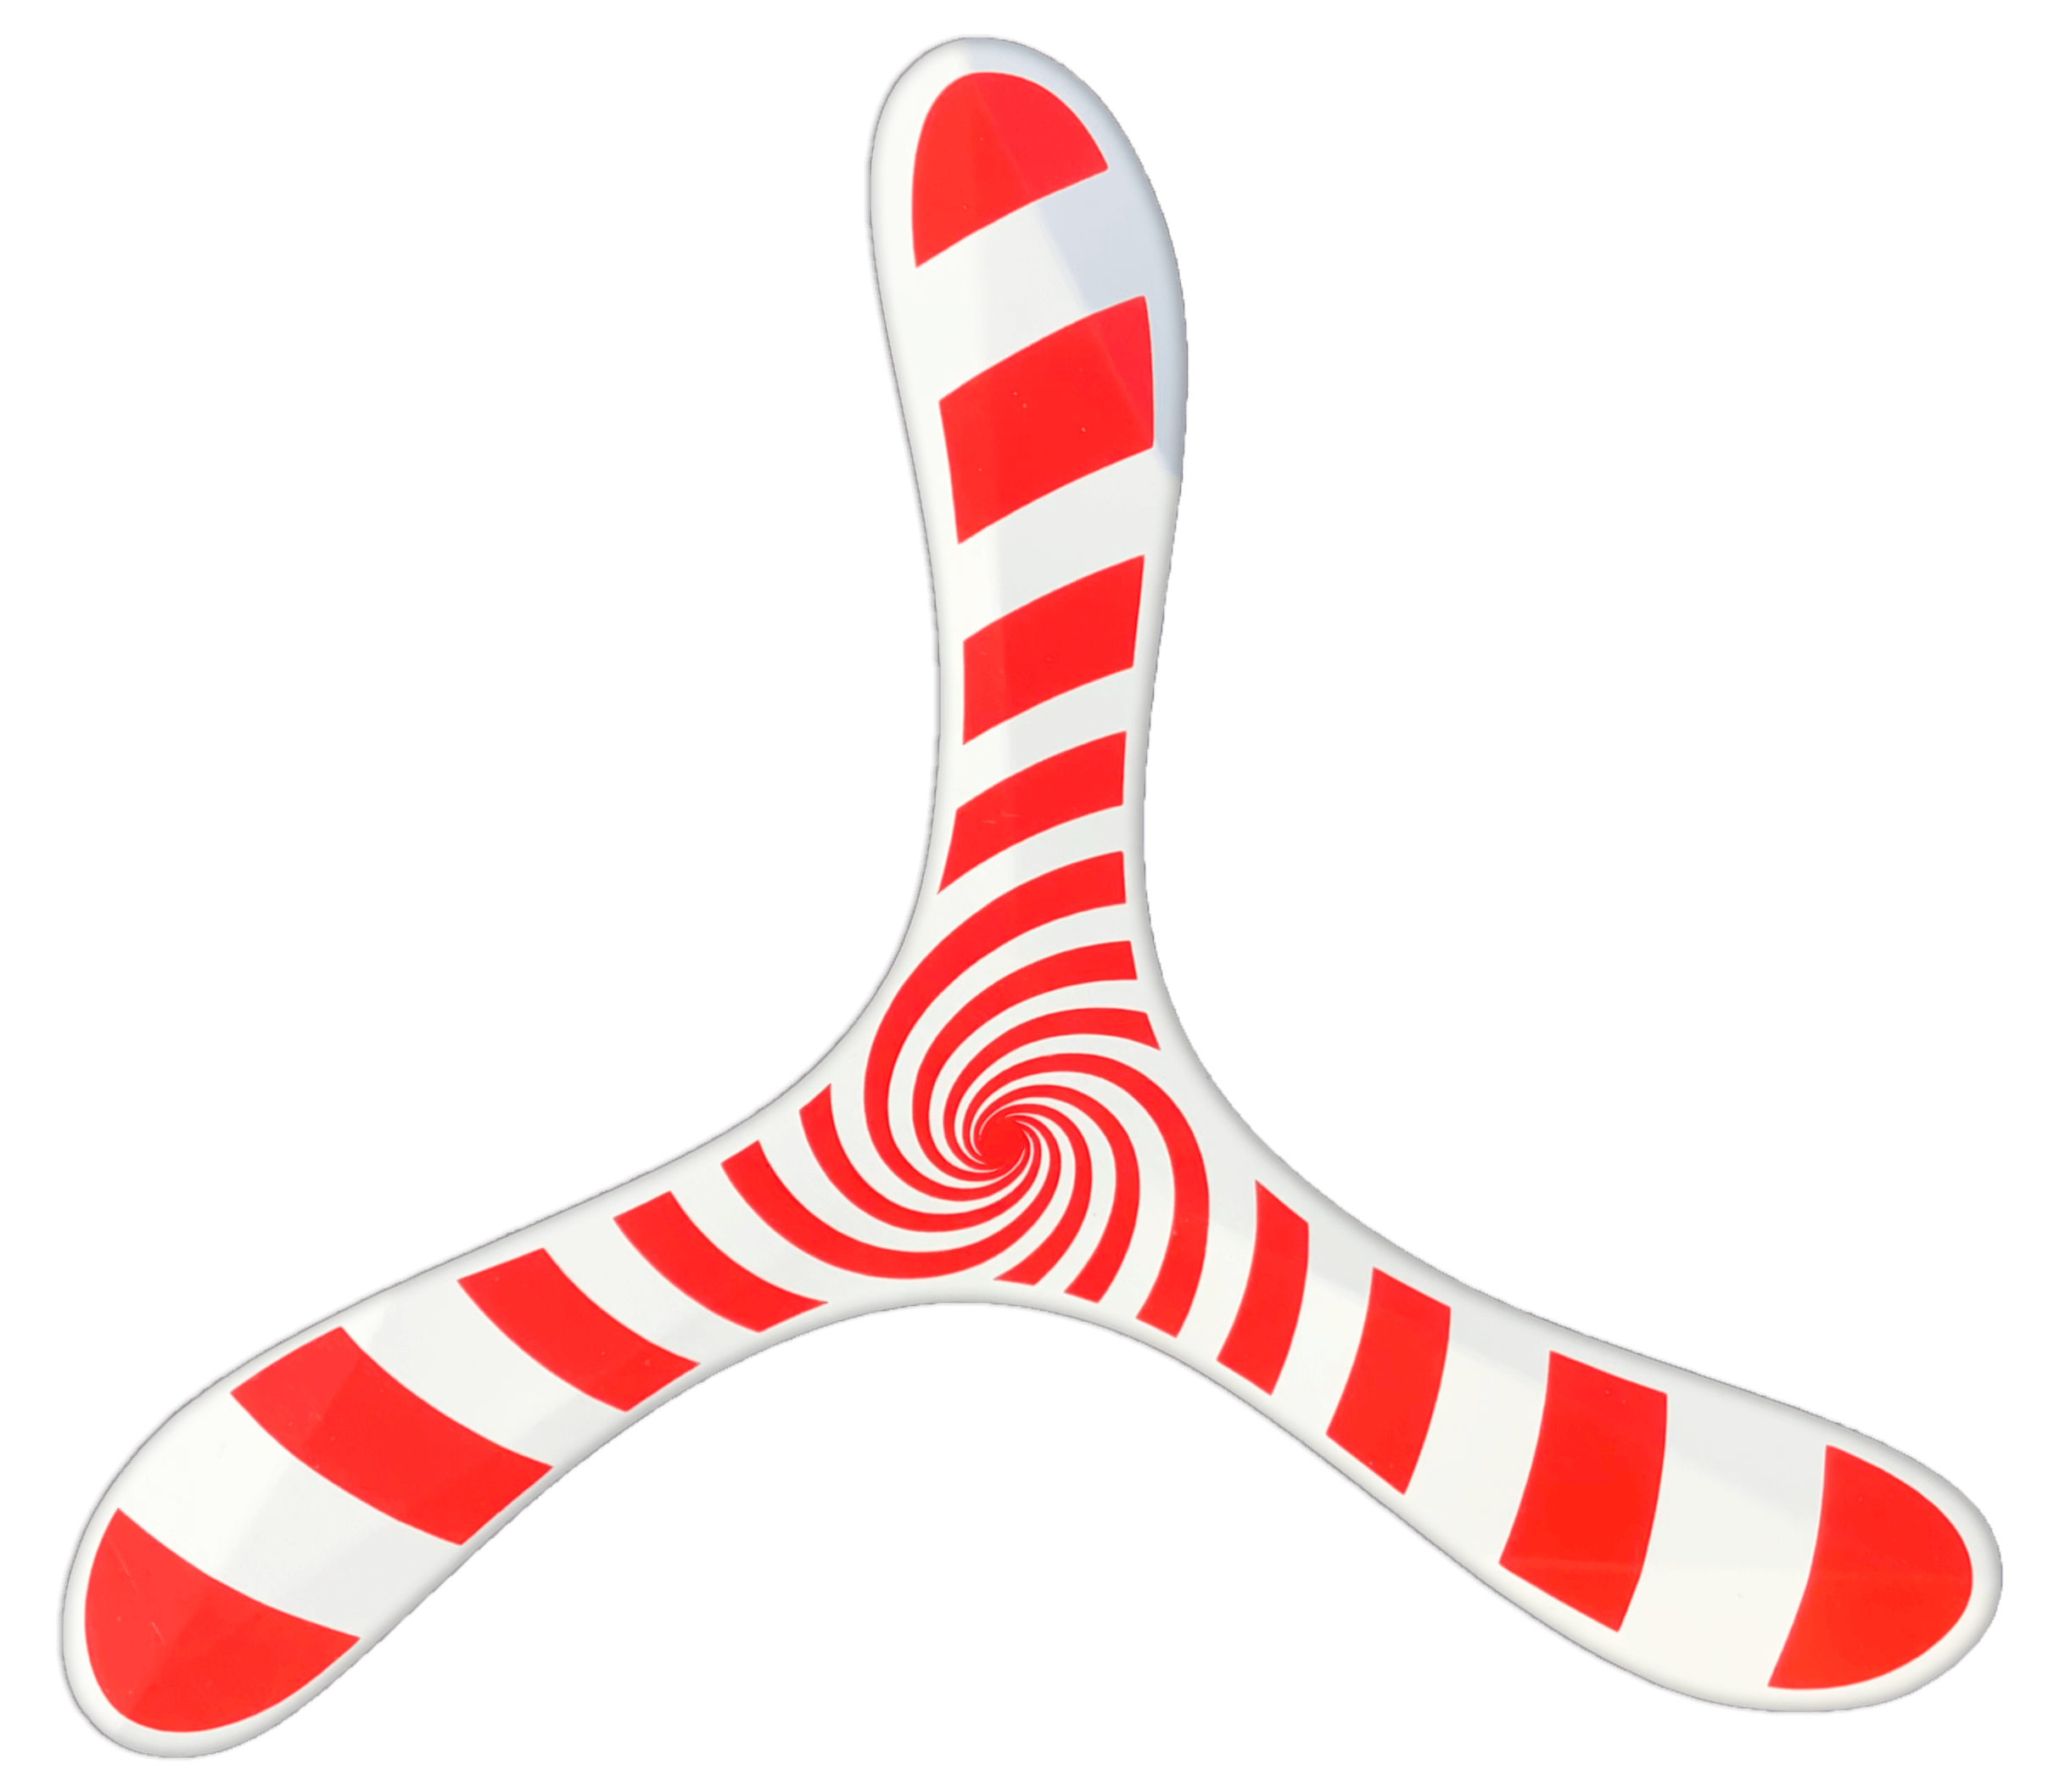 Hypnorang Boomerangs - Short Range and Fun!